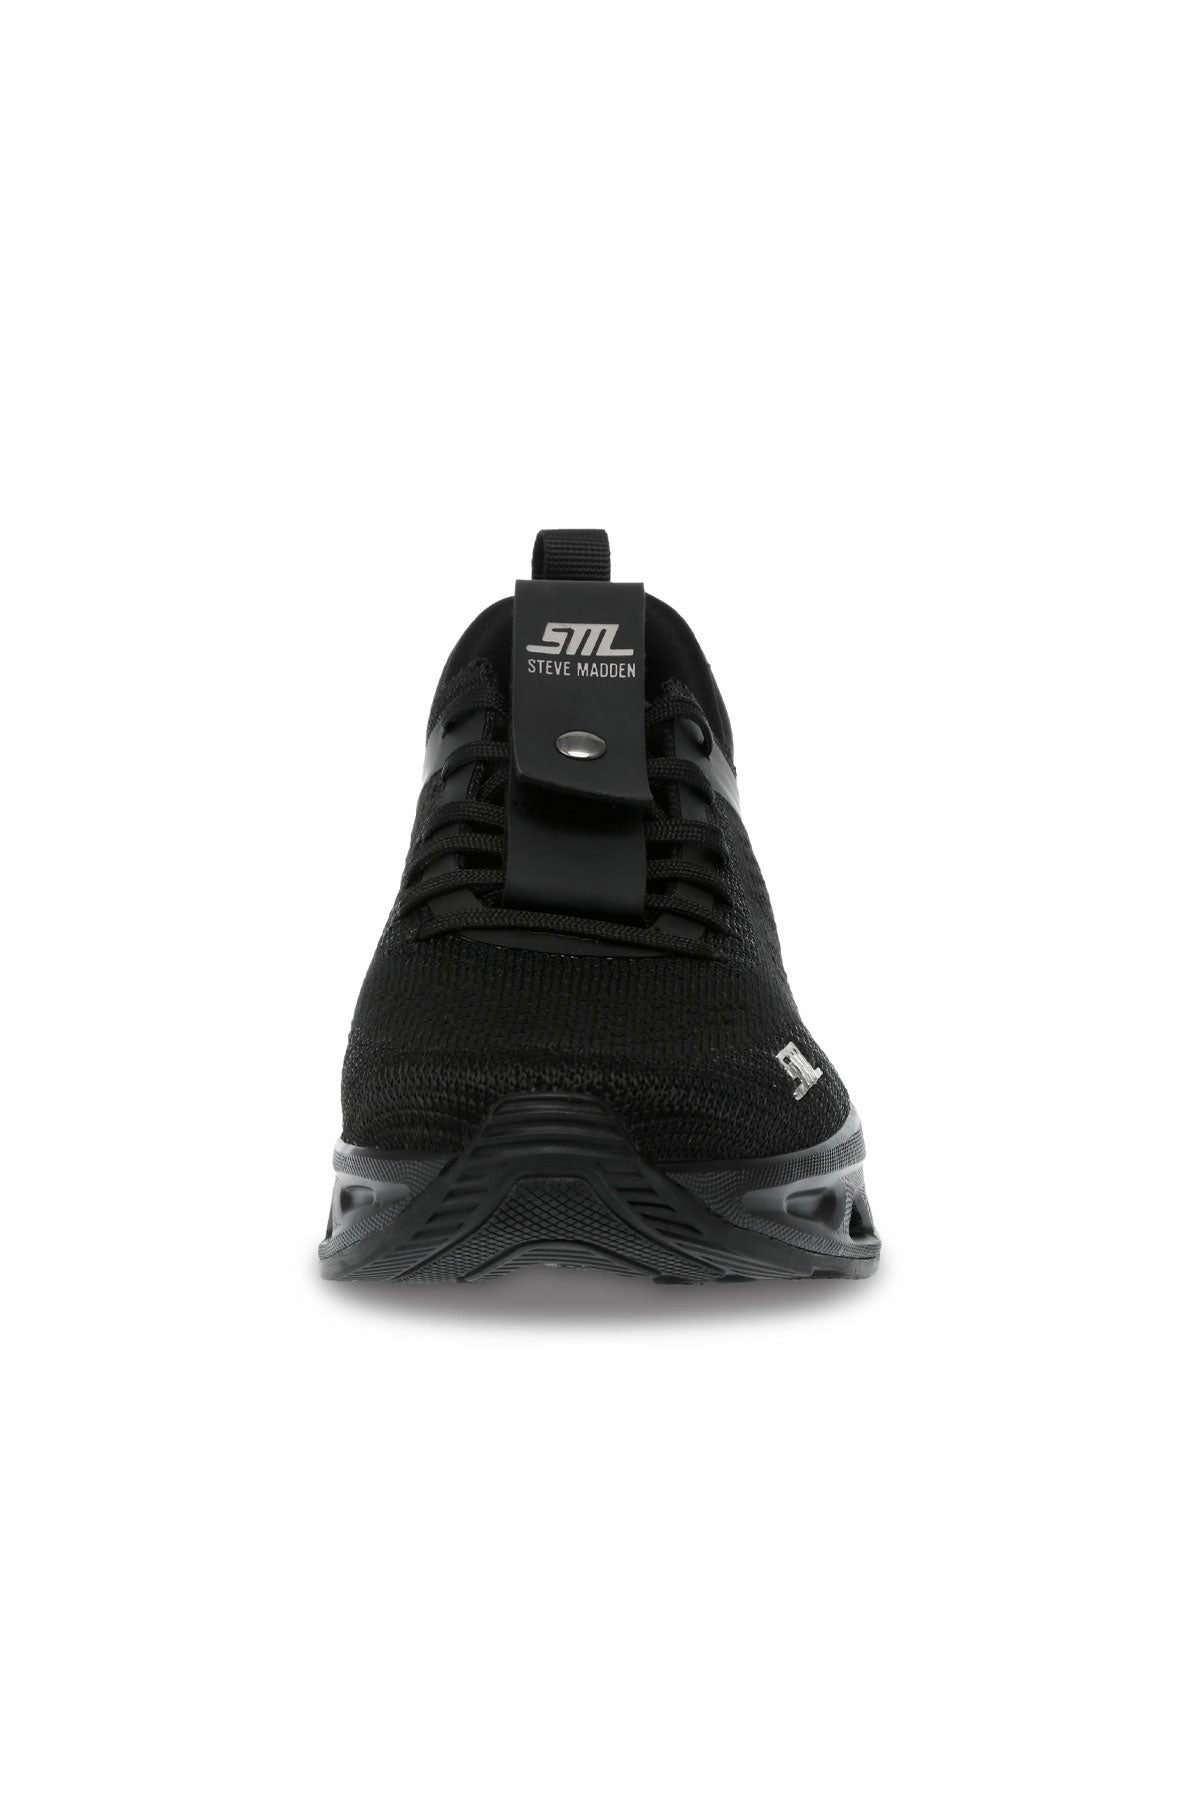 סטיב מאדן נעלי סניקרס Surge בצבע שחור לנשים-Steve Madden-36-נאקו